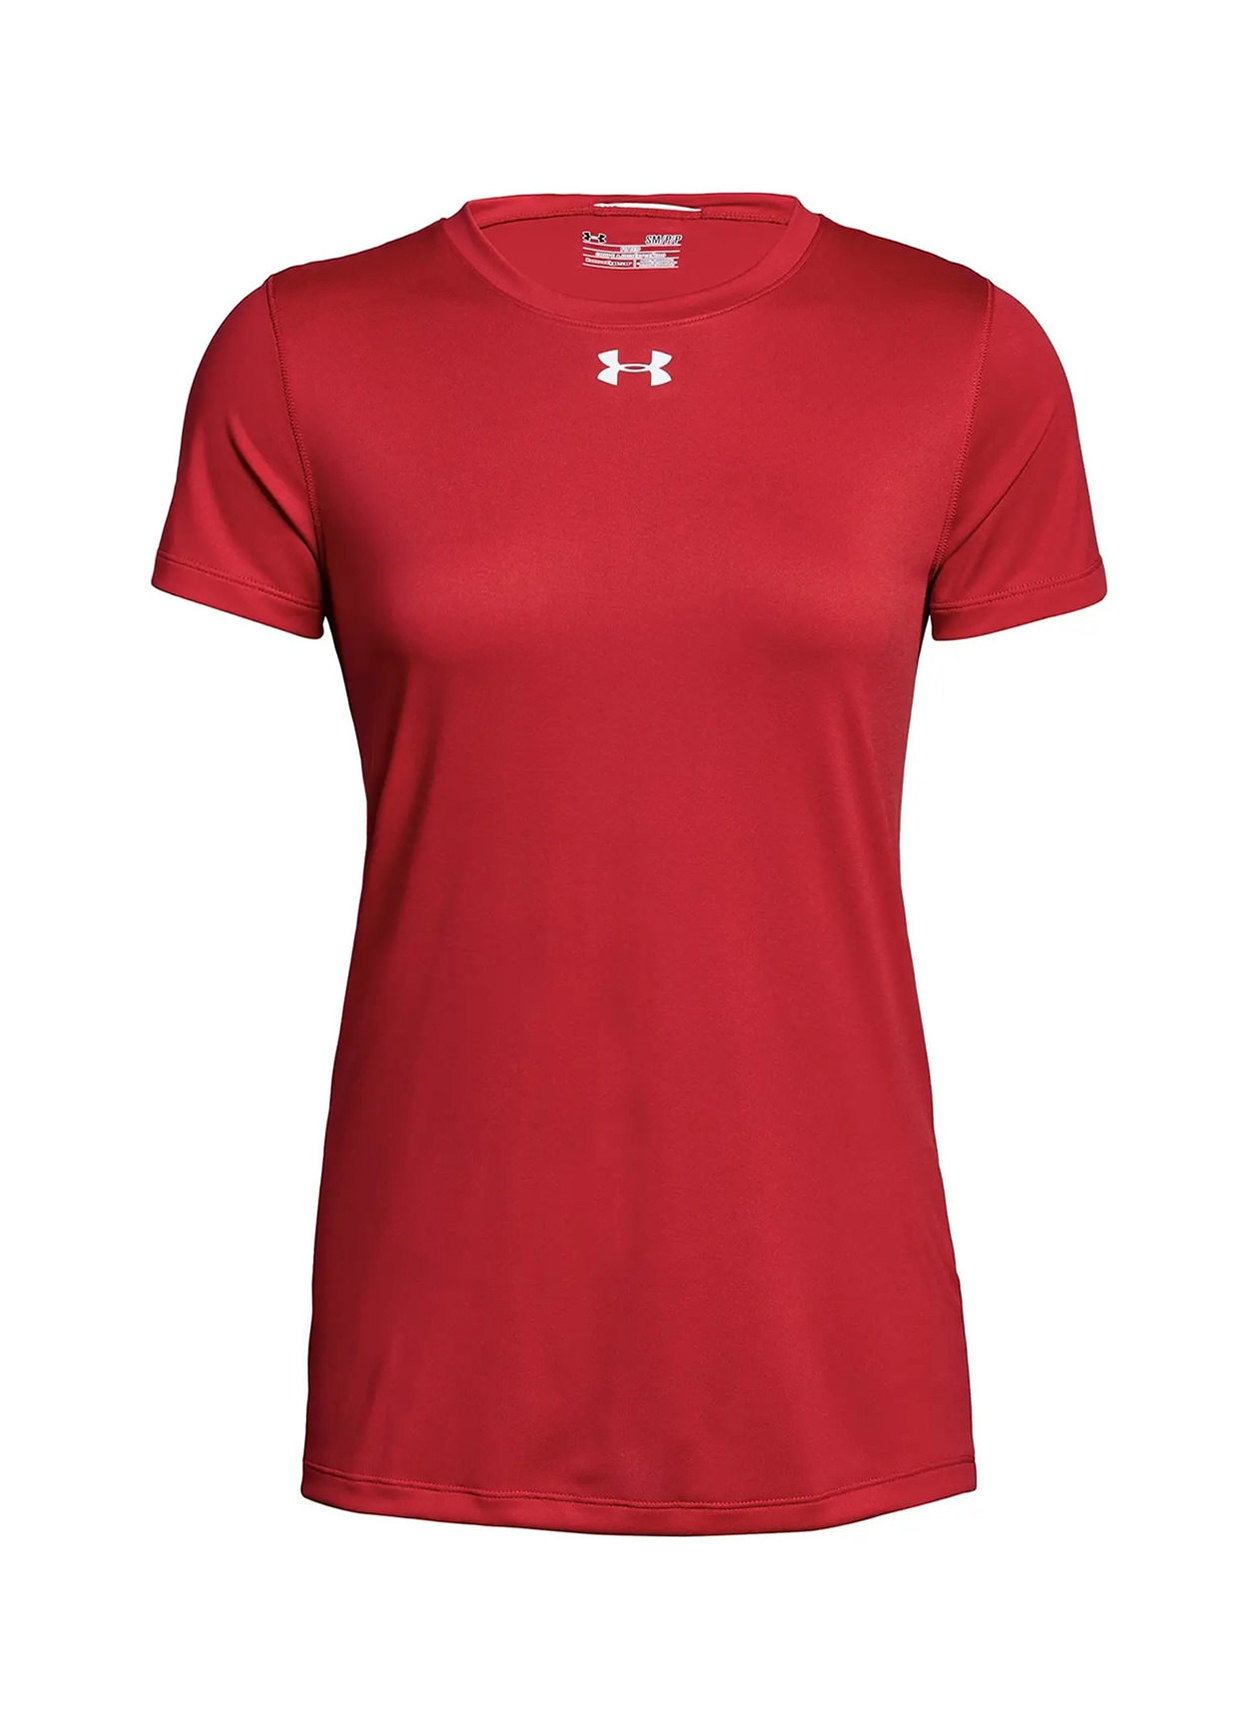 Branded Under Armour Ladies Locker T-Shirt 2.0 Red/M Silver